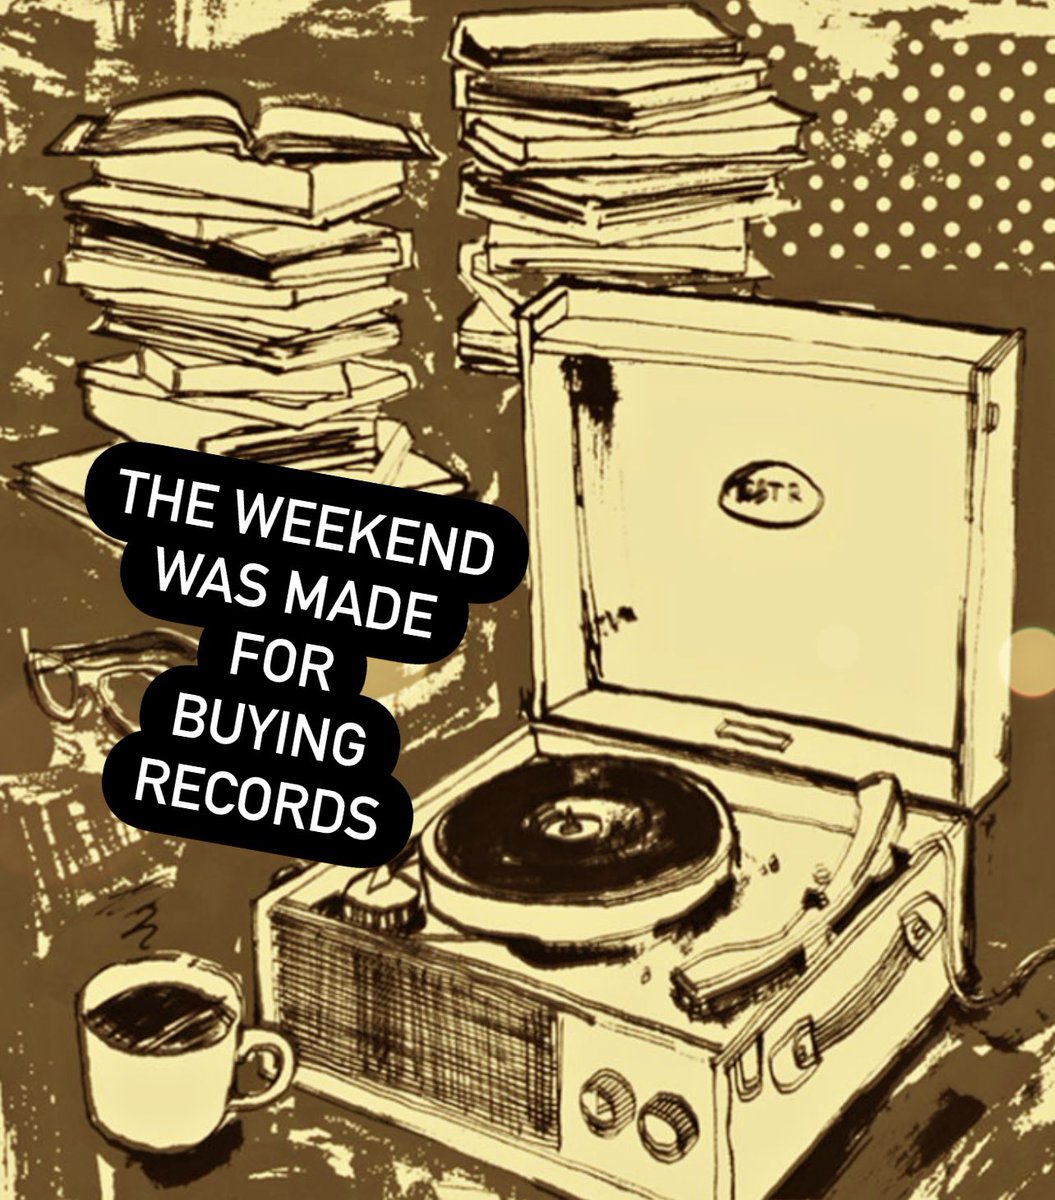 We Love Records.
.
.
#records #vinyl #recordshop #buyrecords #henleyinarden